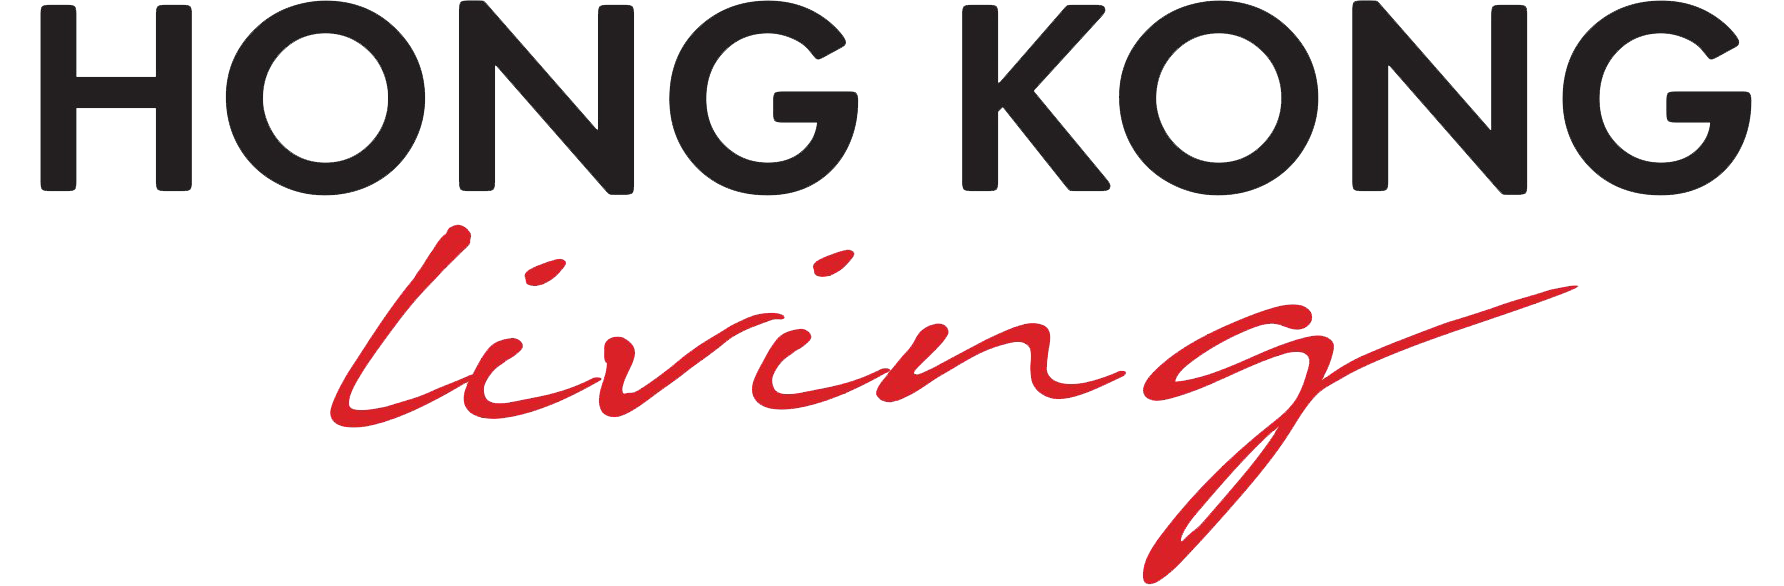 hk-living-logo-a1.png